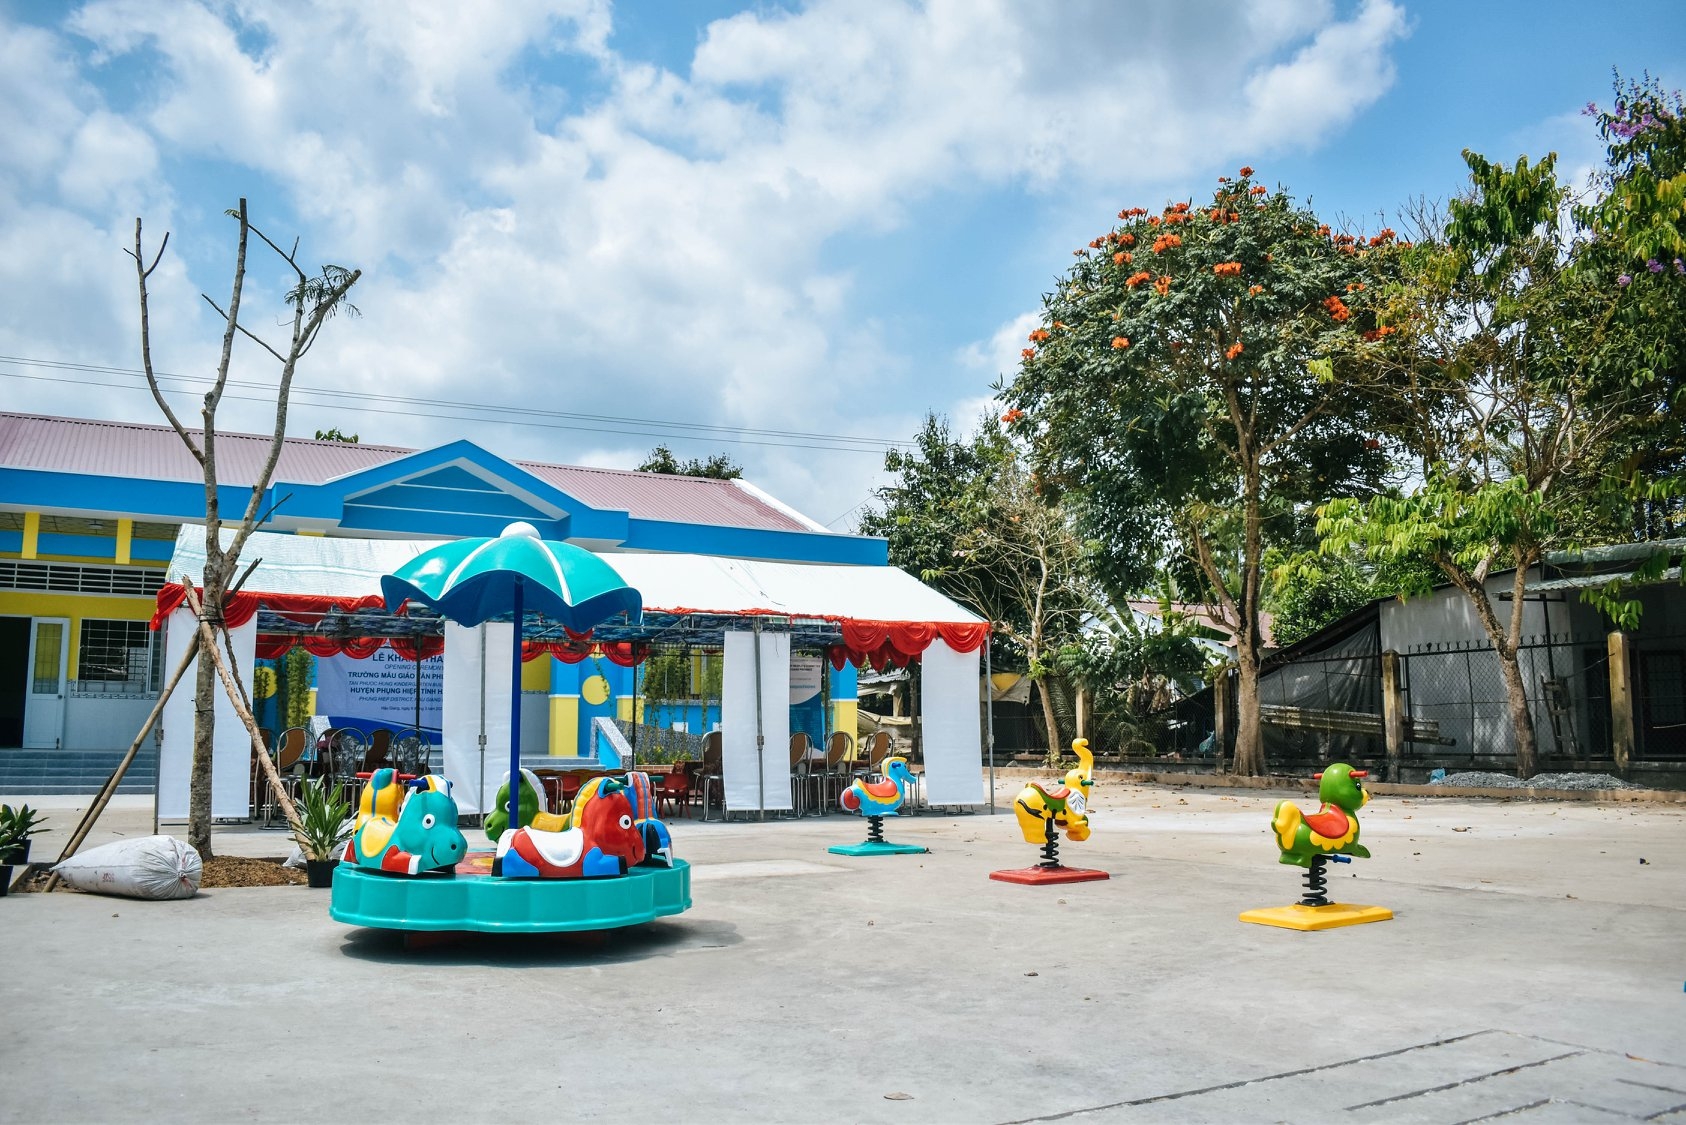 Another kindergarten built by Saigonchildren in Hau Giang